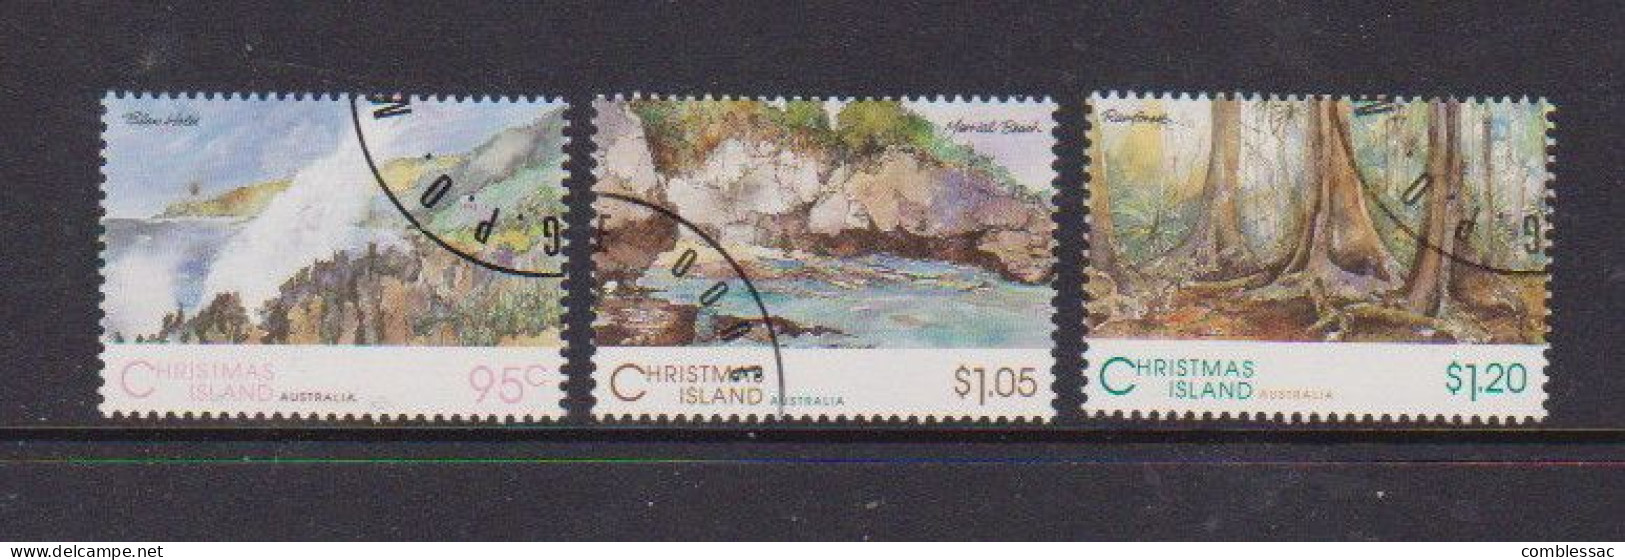 CHRISTMAS  ISLAND    1993    Scenic  Views    Part  Set  Of  3    USED - Christmas Island